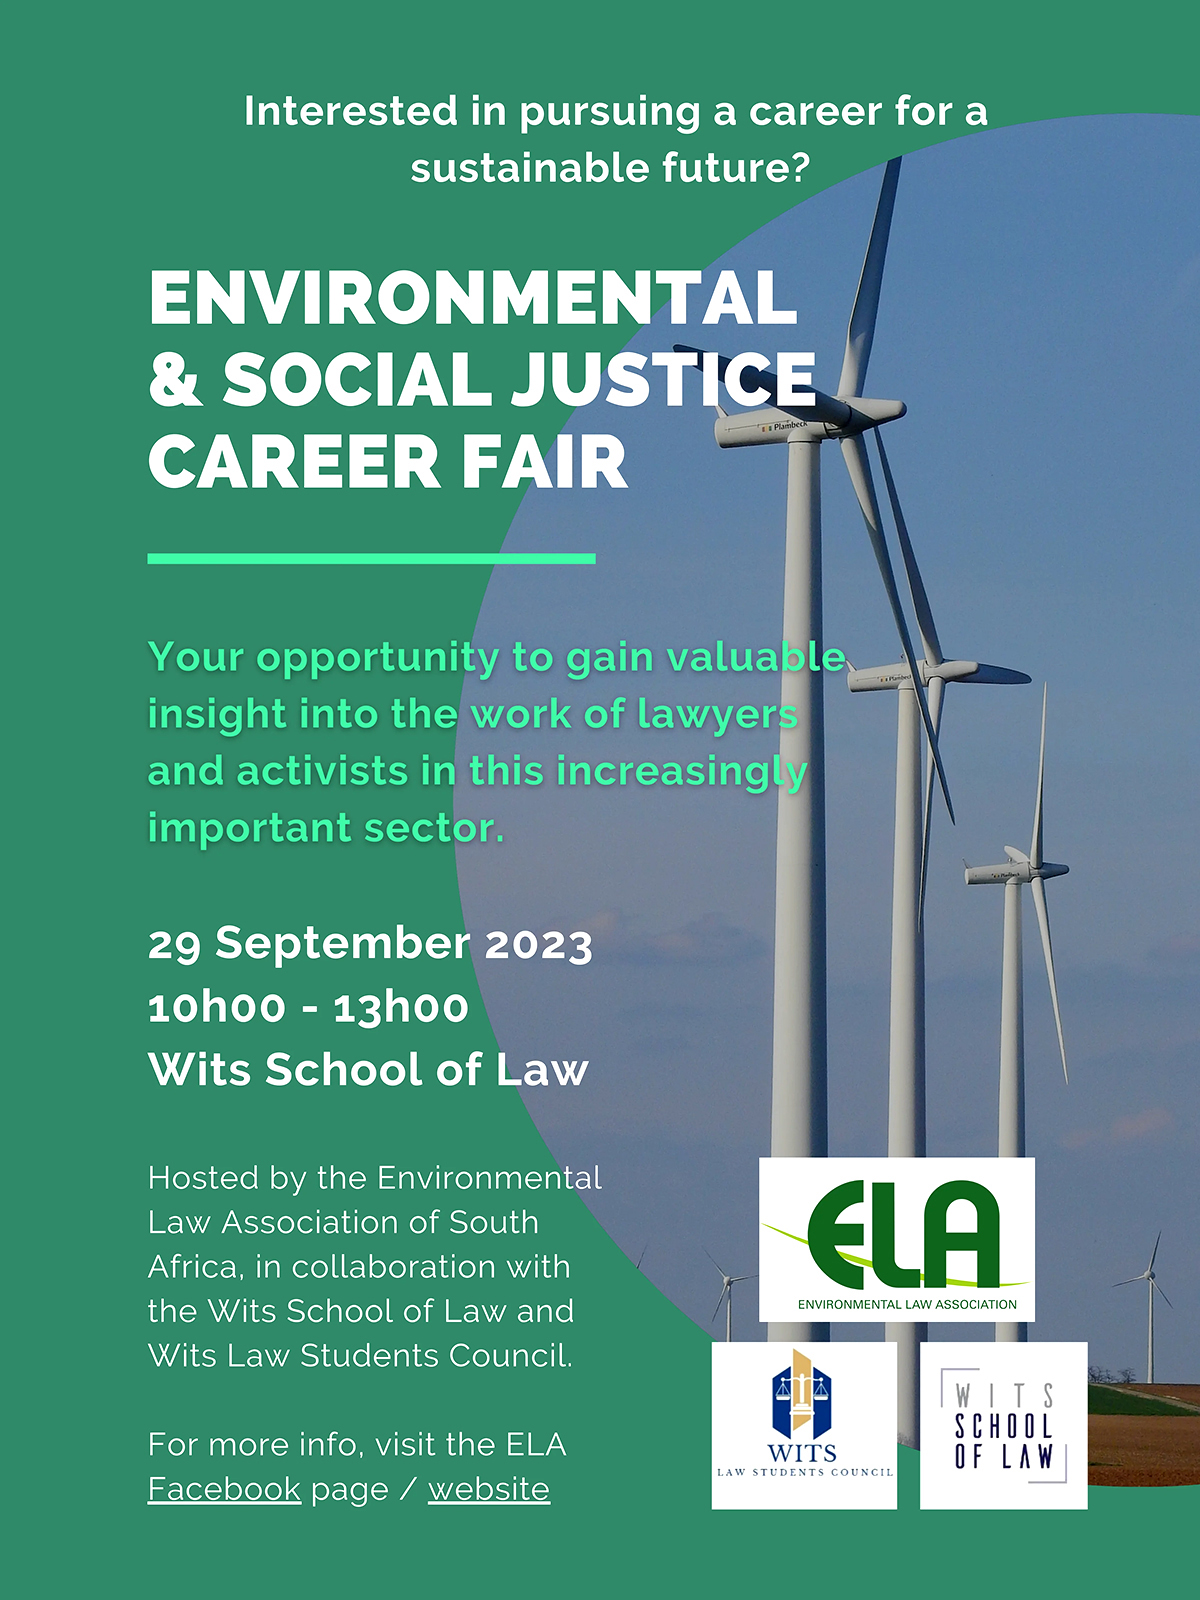 Environmental & Social Justice Career Fair